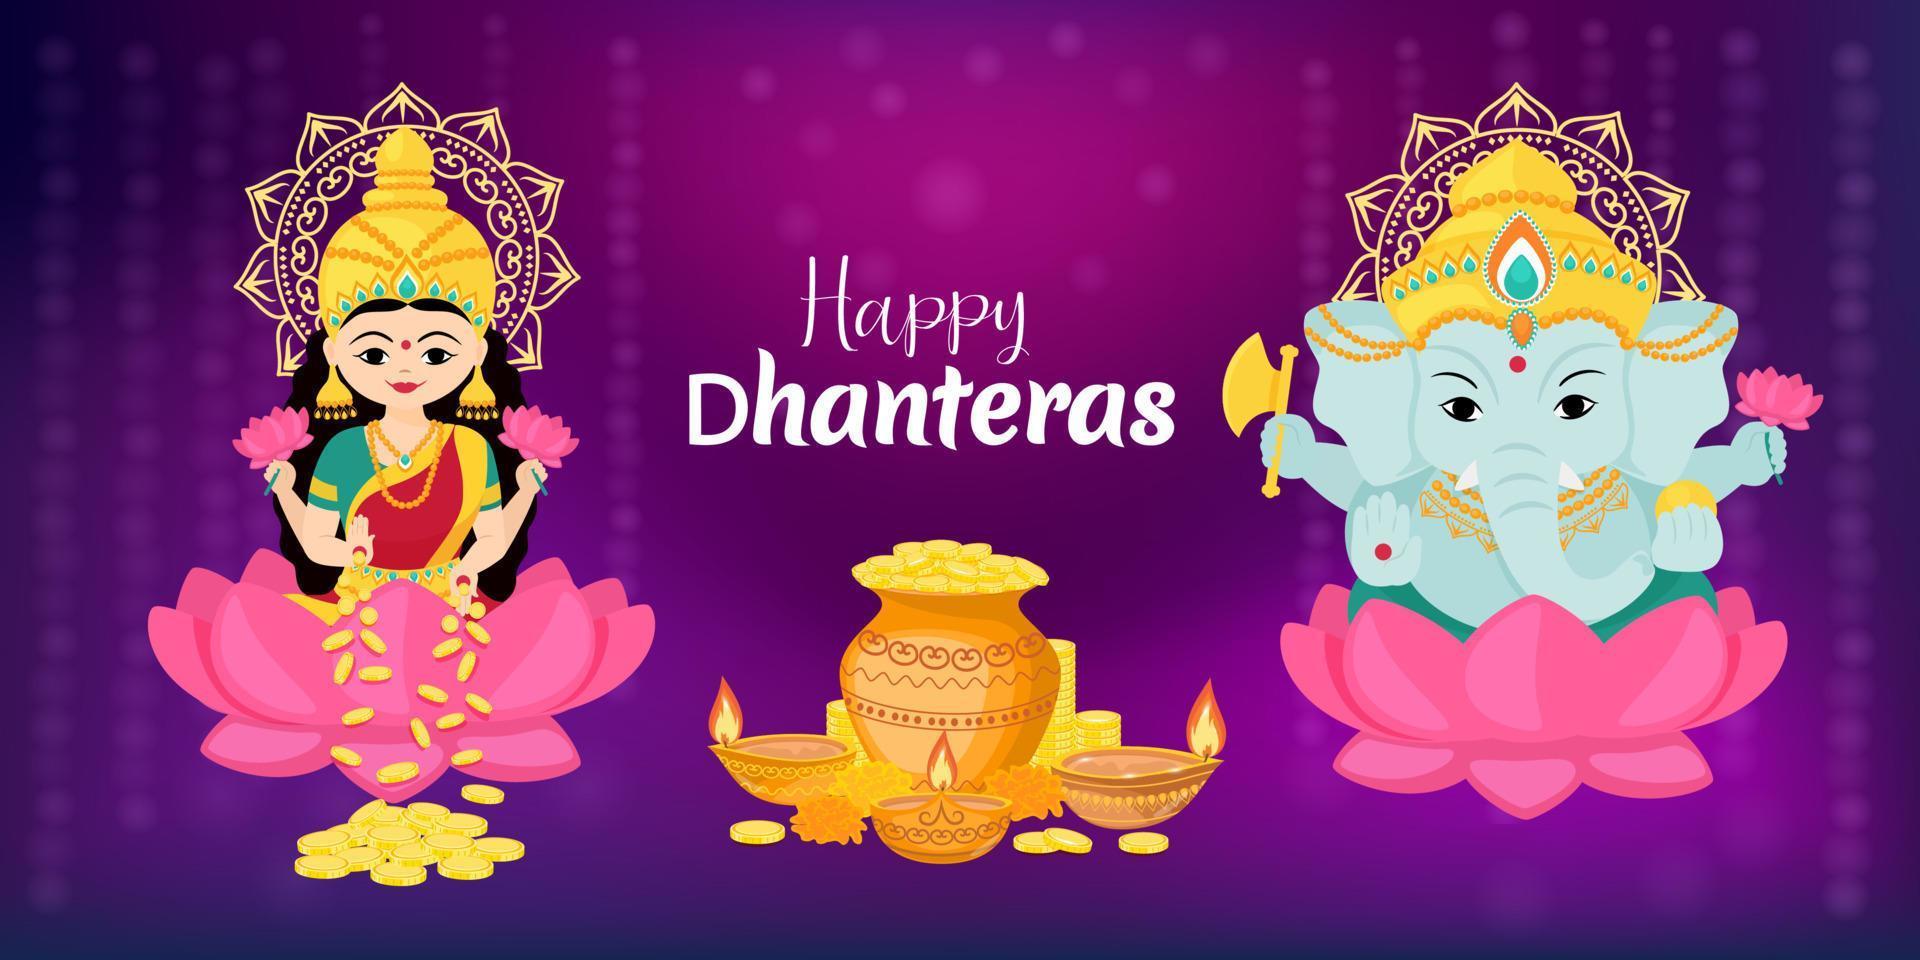 Happy Dhanteras. Goddess Lakshmi and God Ganesha sit on a lotus. Traditional Indian festival of lights. Vector illustration for banner or poster.